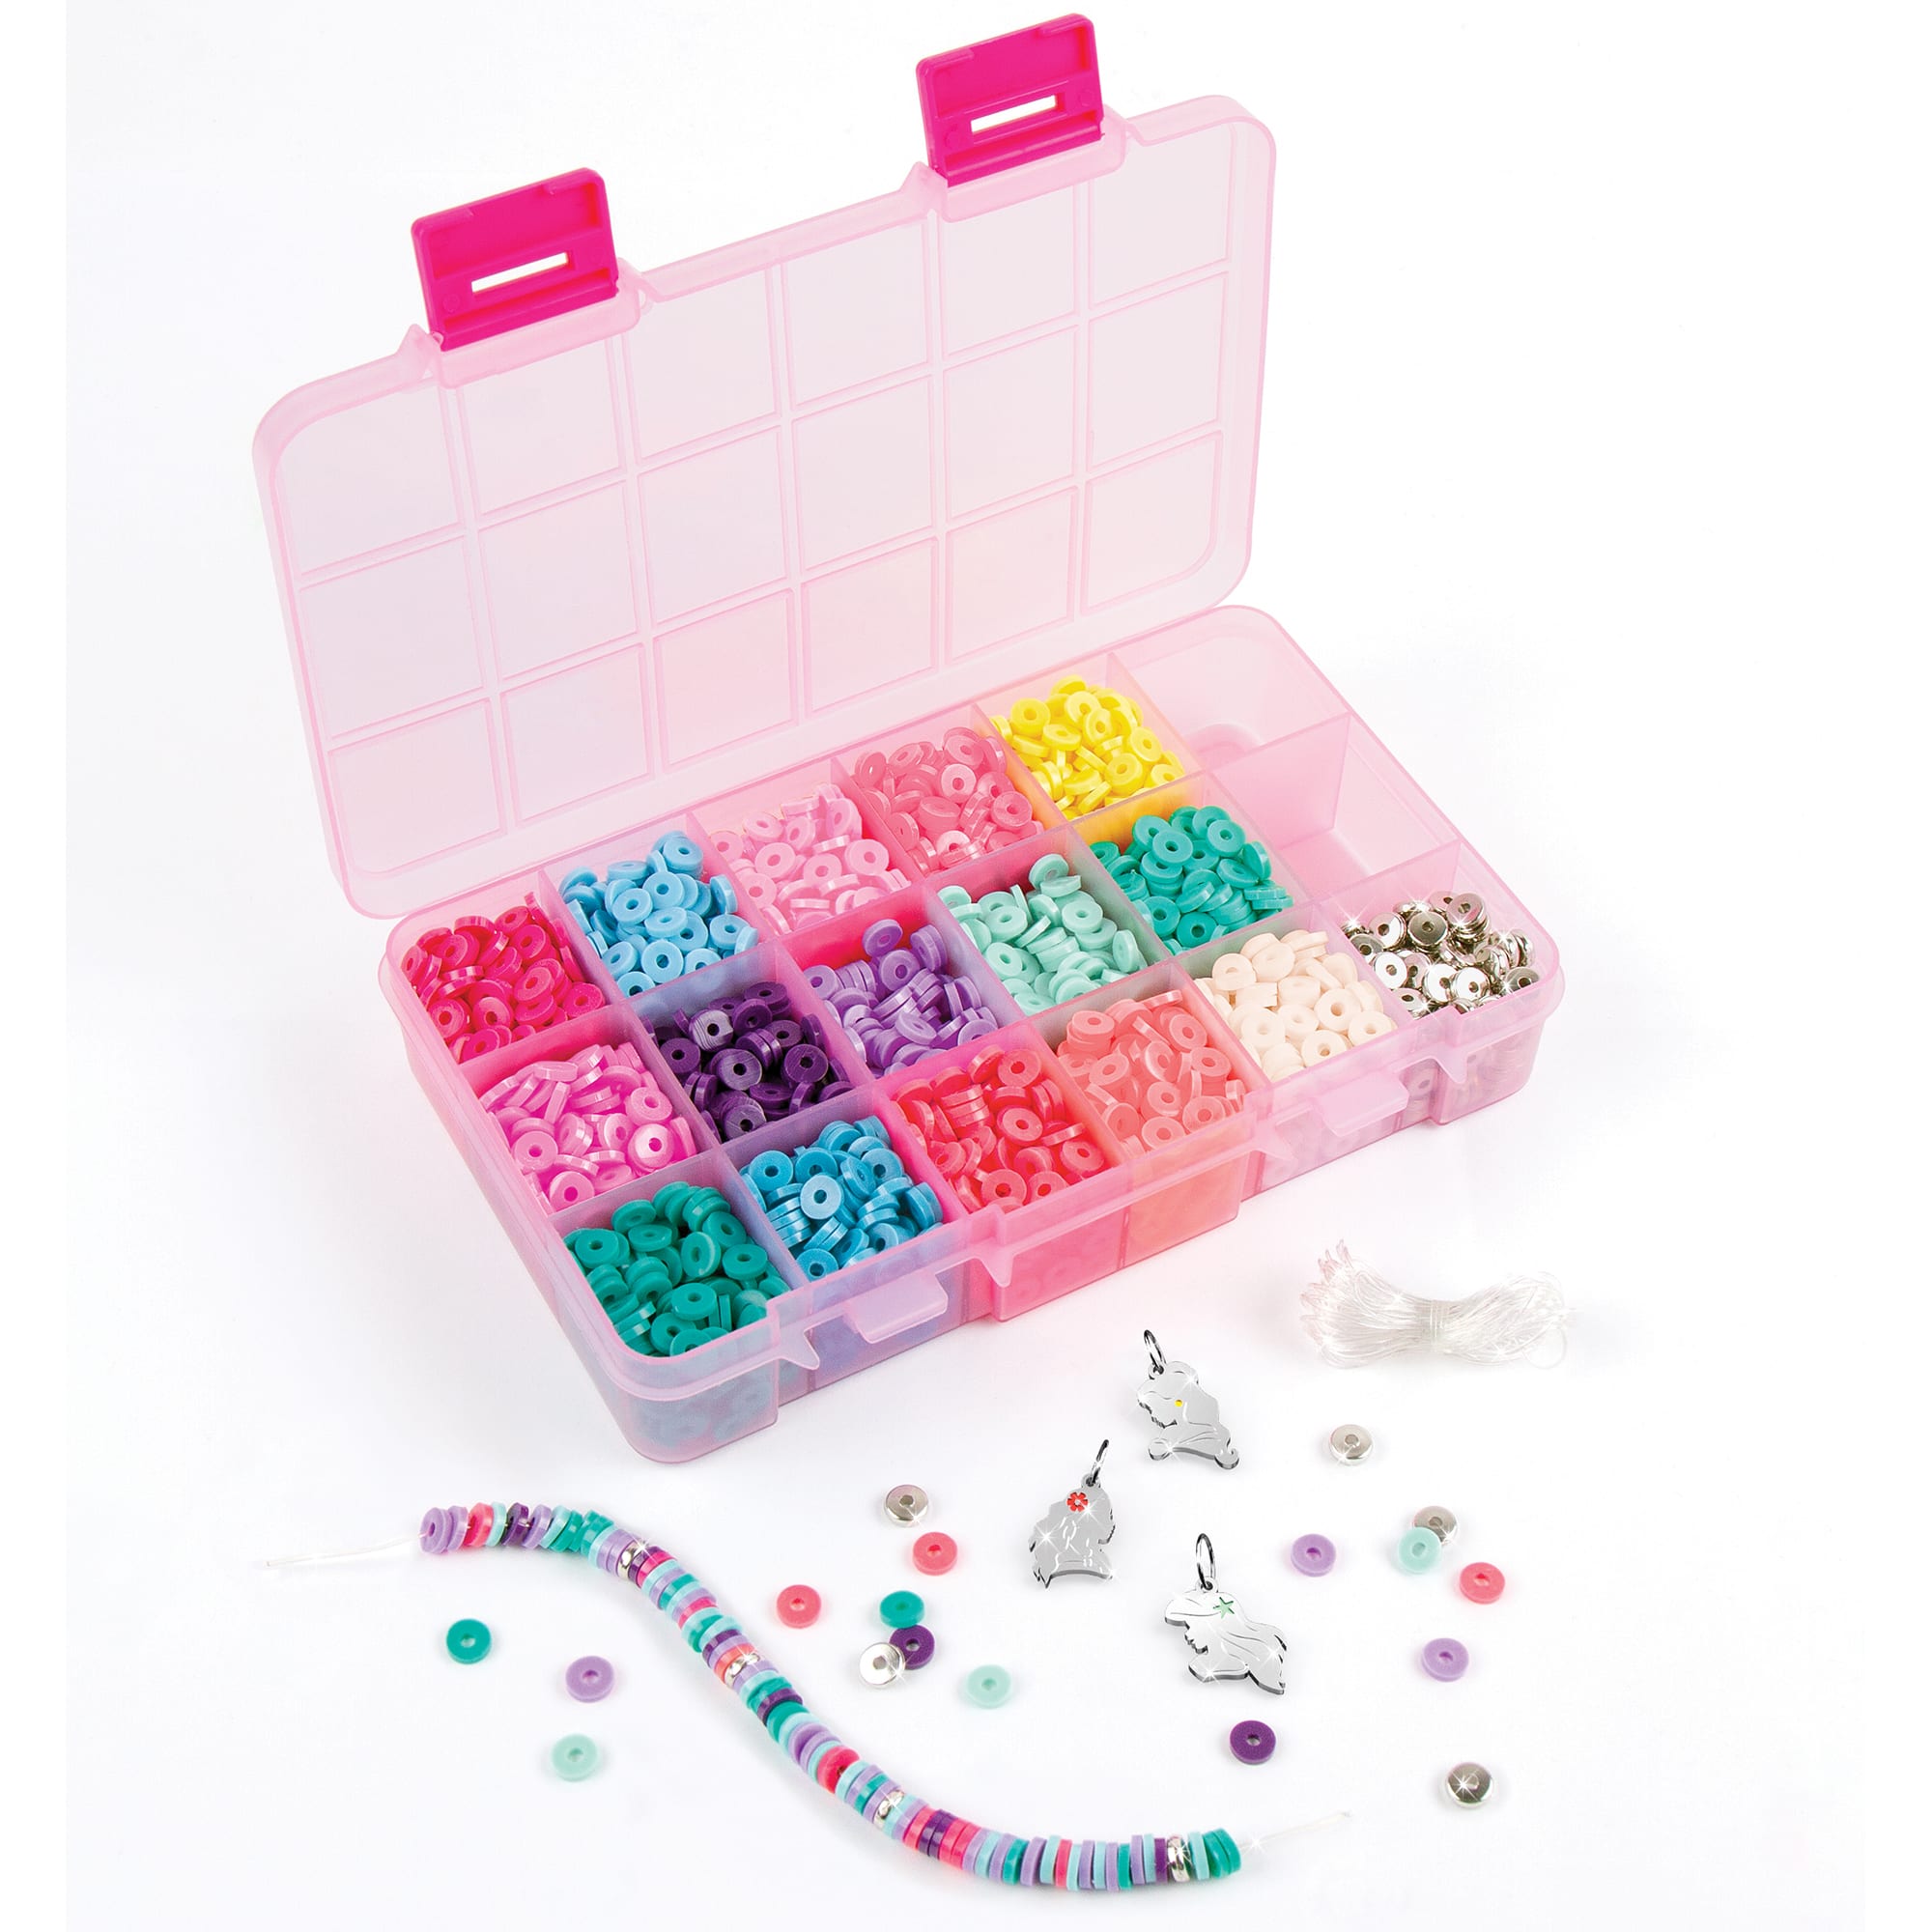 Make It Real Disney Princess Royal Rounds Heishi Beads Bracelet Activity Kit